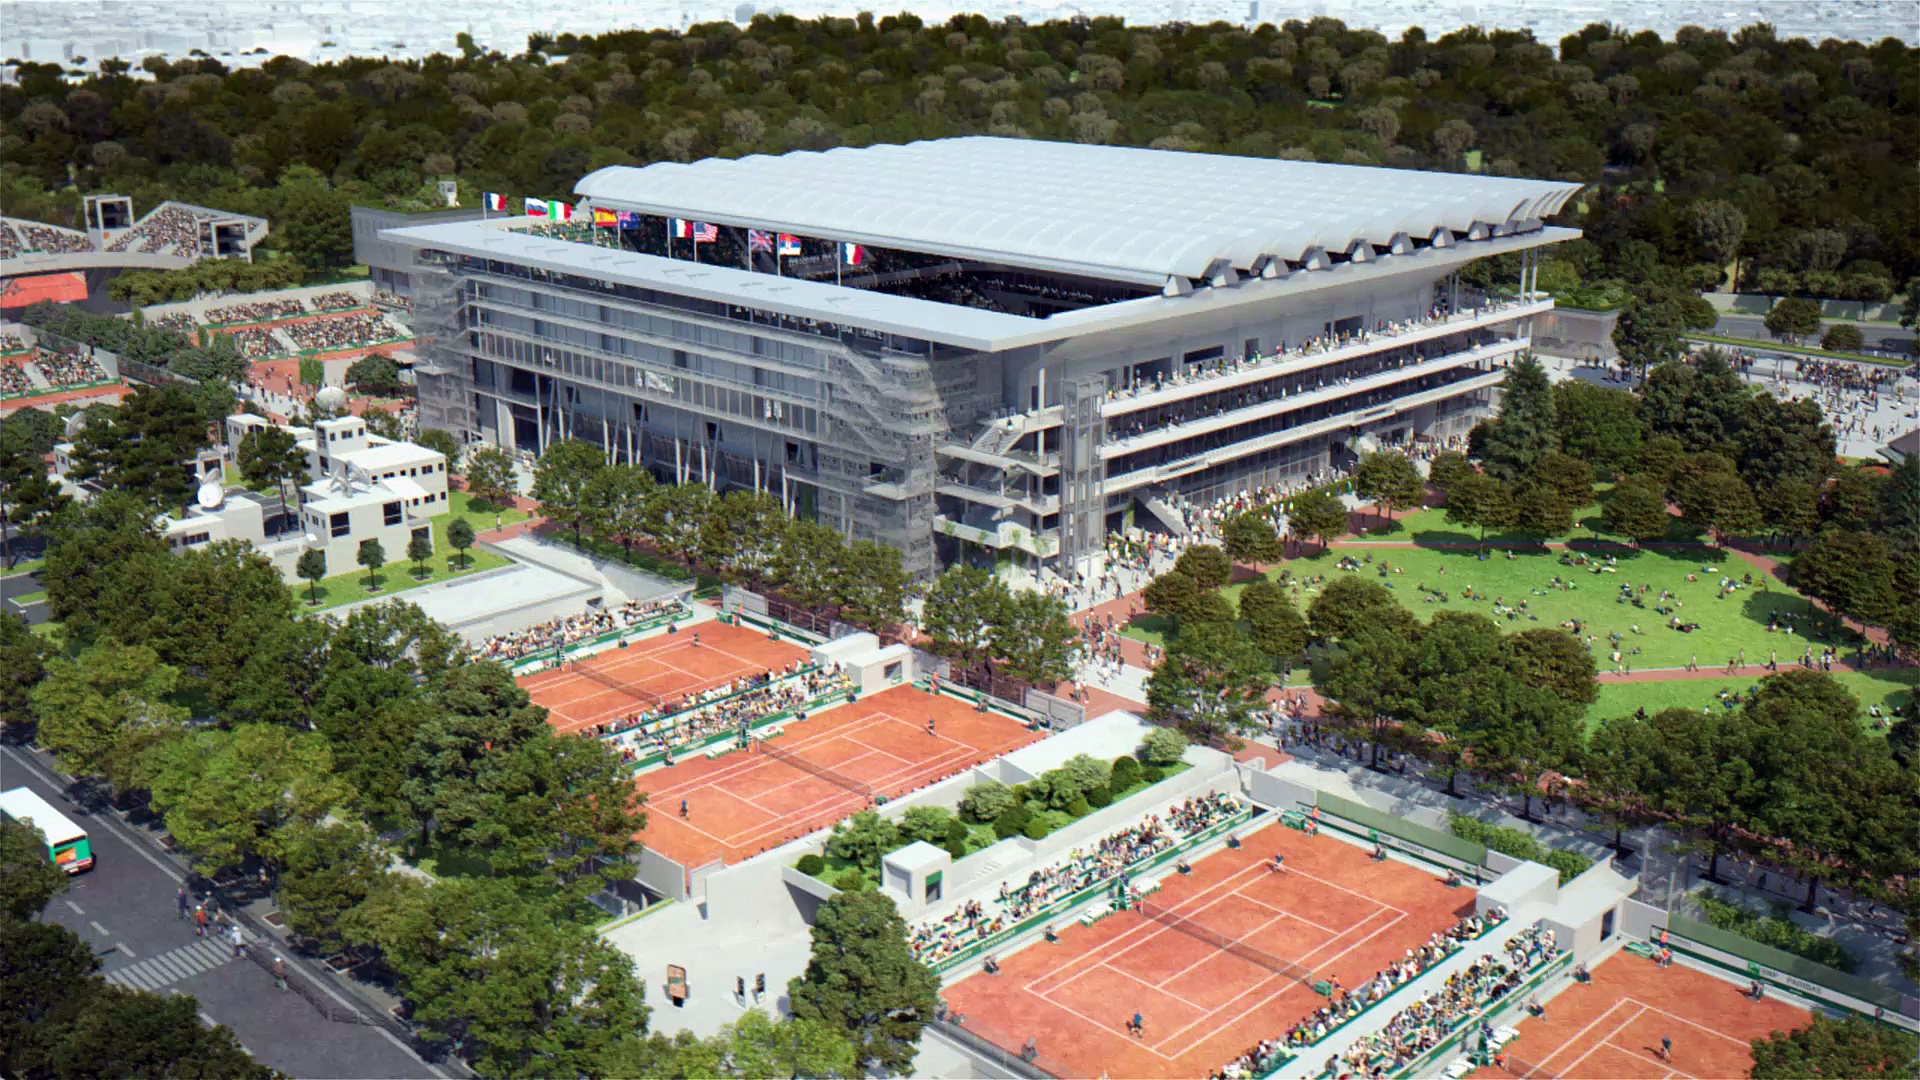 Roland Garros Roof & 2020 Art 